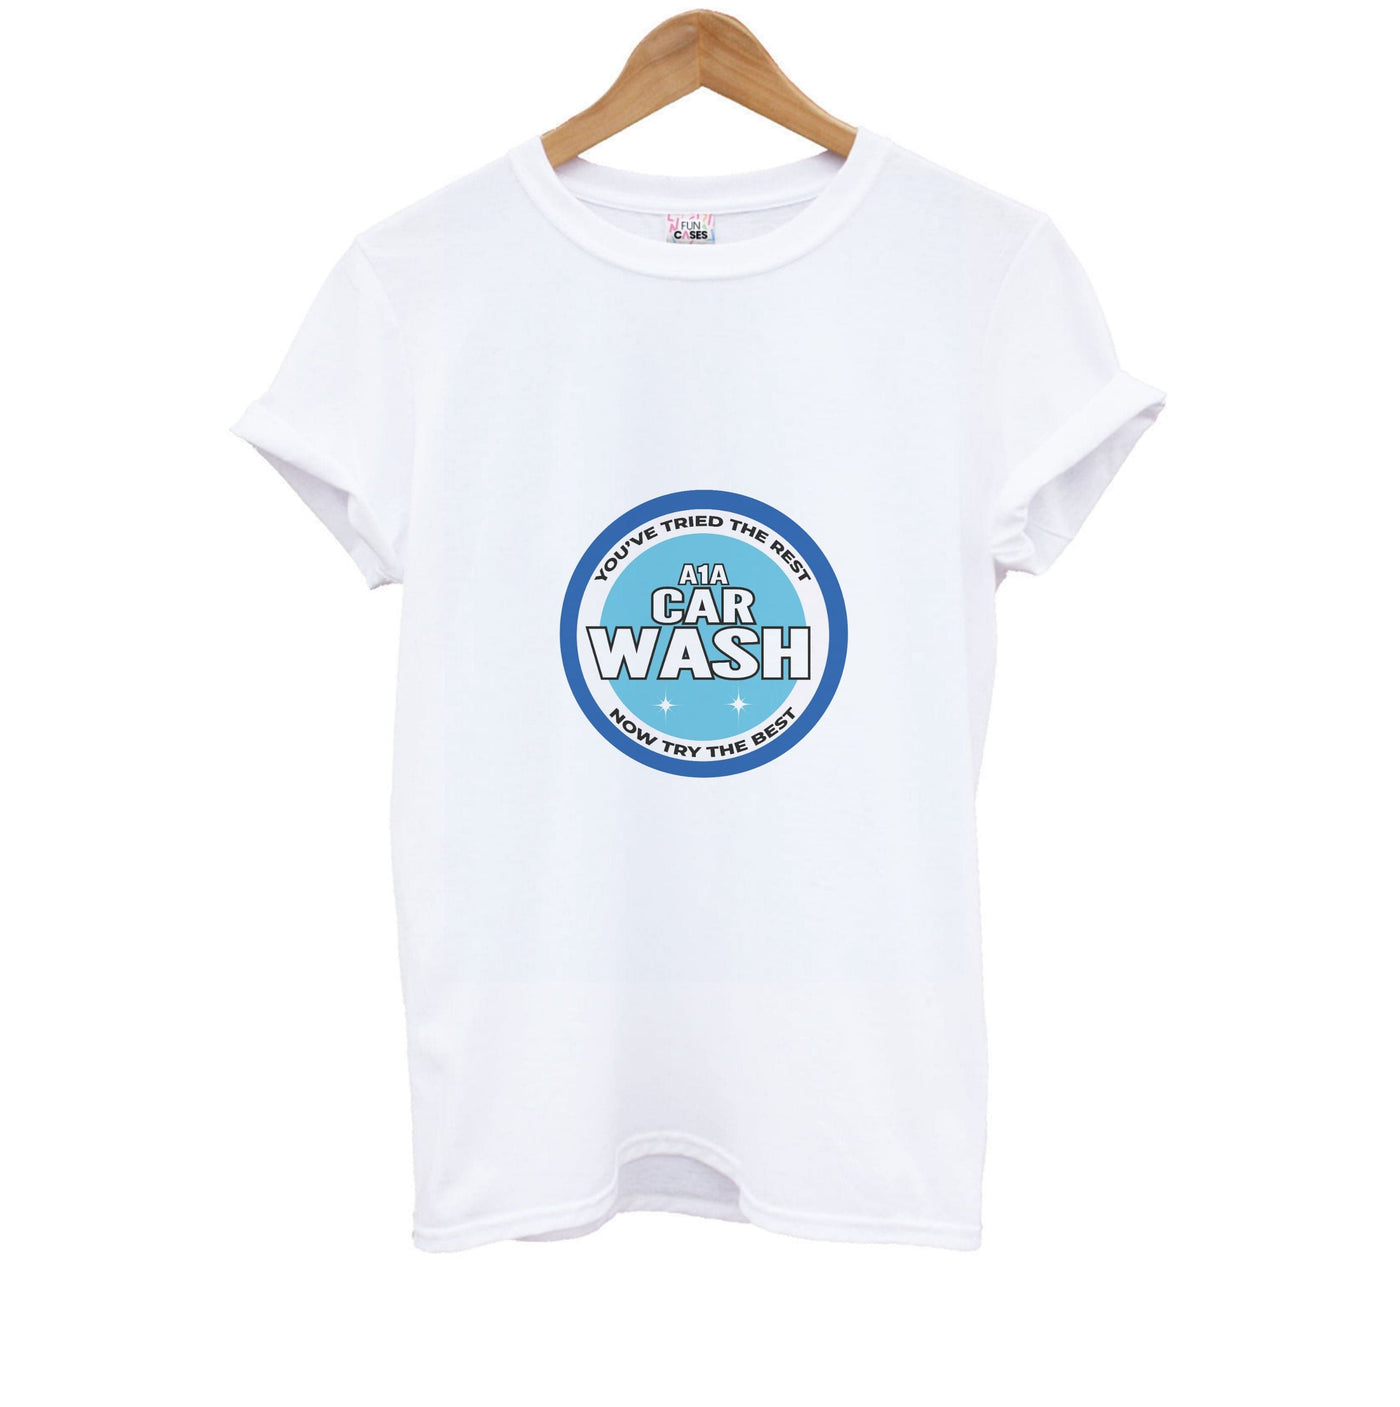 A1A Car Wash - Breaking Bad Kids T-Shirt